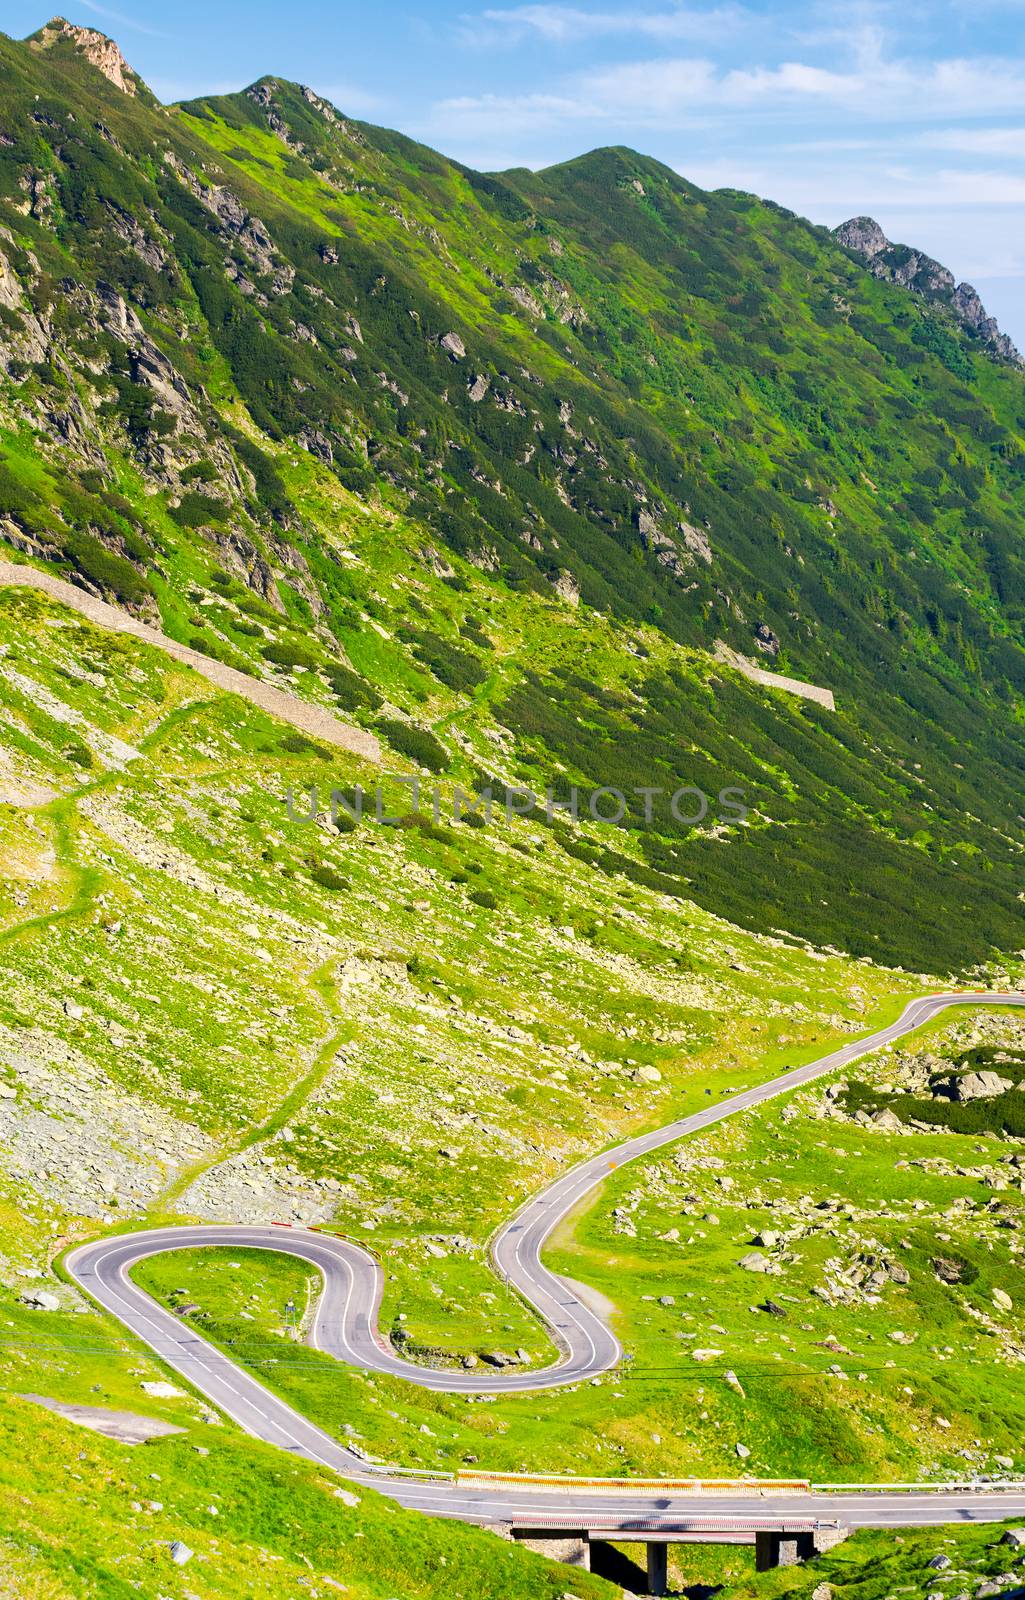 legendary Tranfagarasan road in Romanian mountains by Pellinni